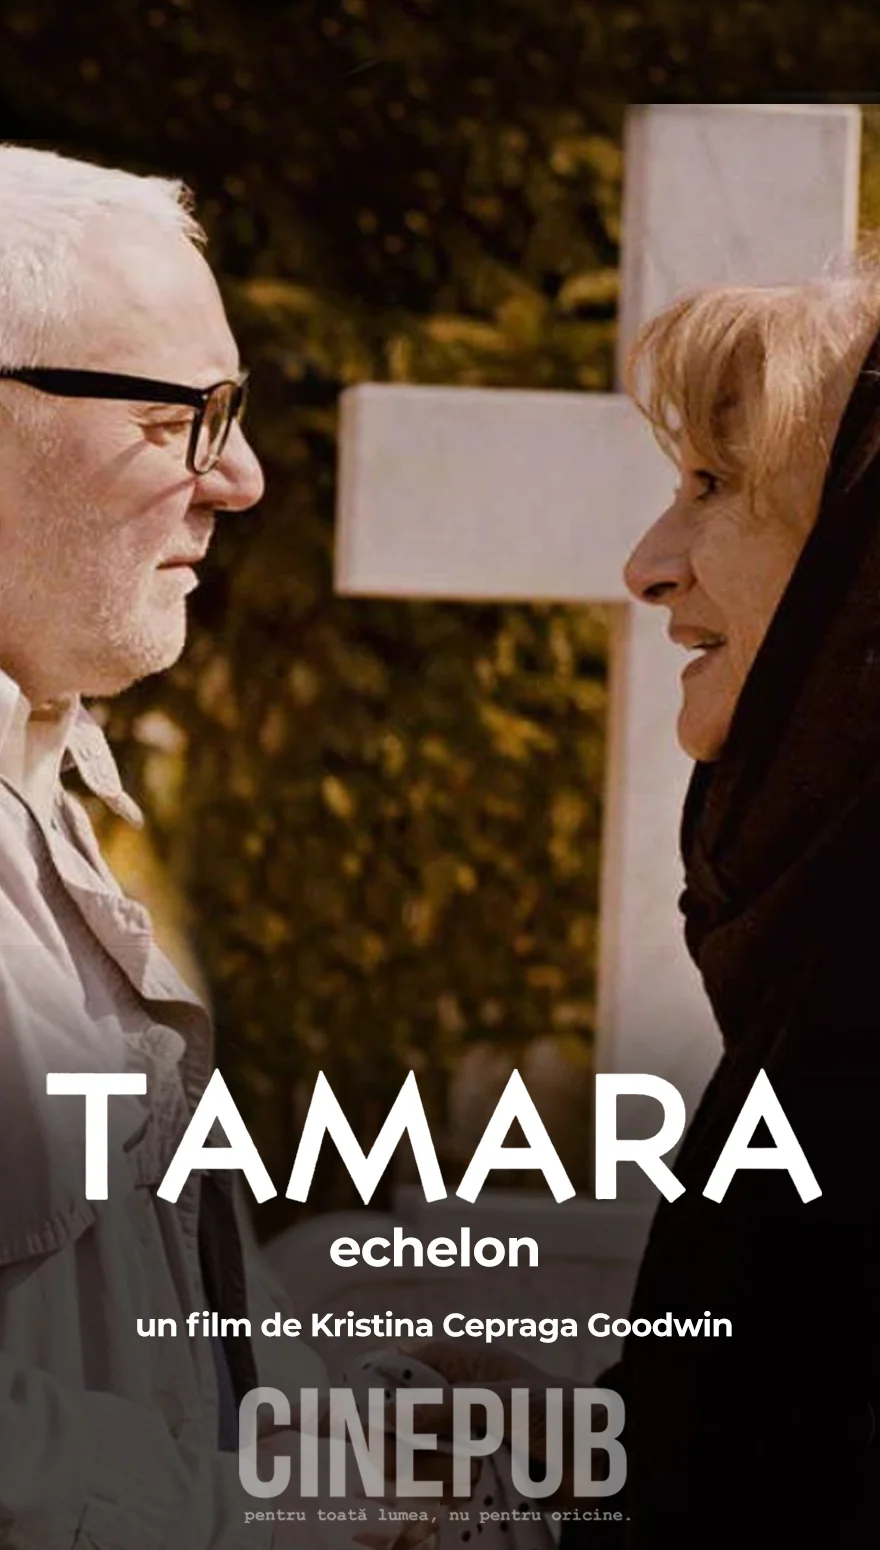 Tamara Echelon - short film by Kristina Cepraga online on CINEPUB